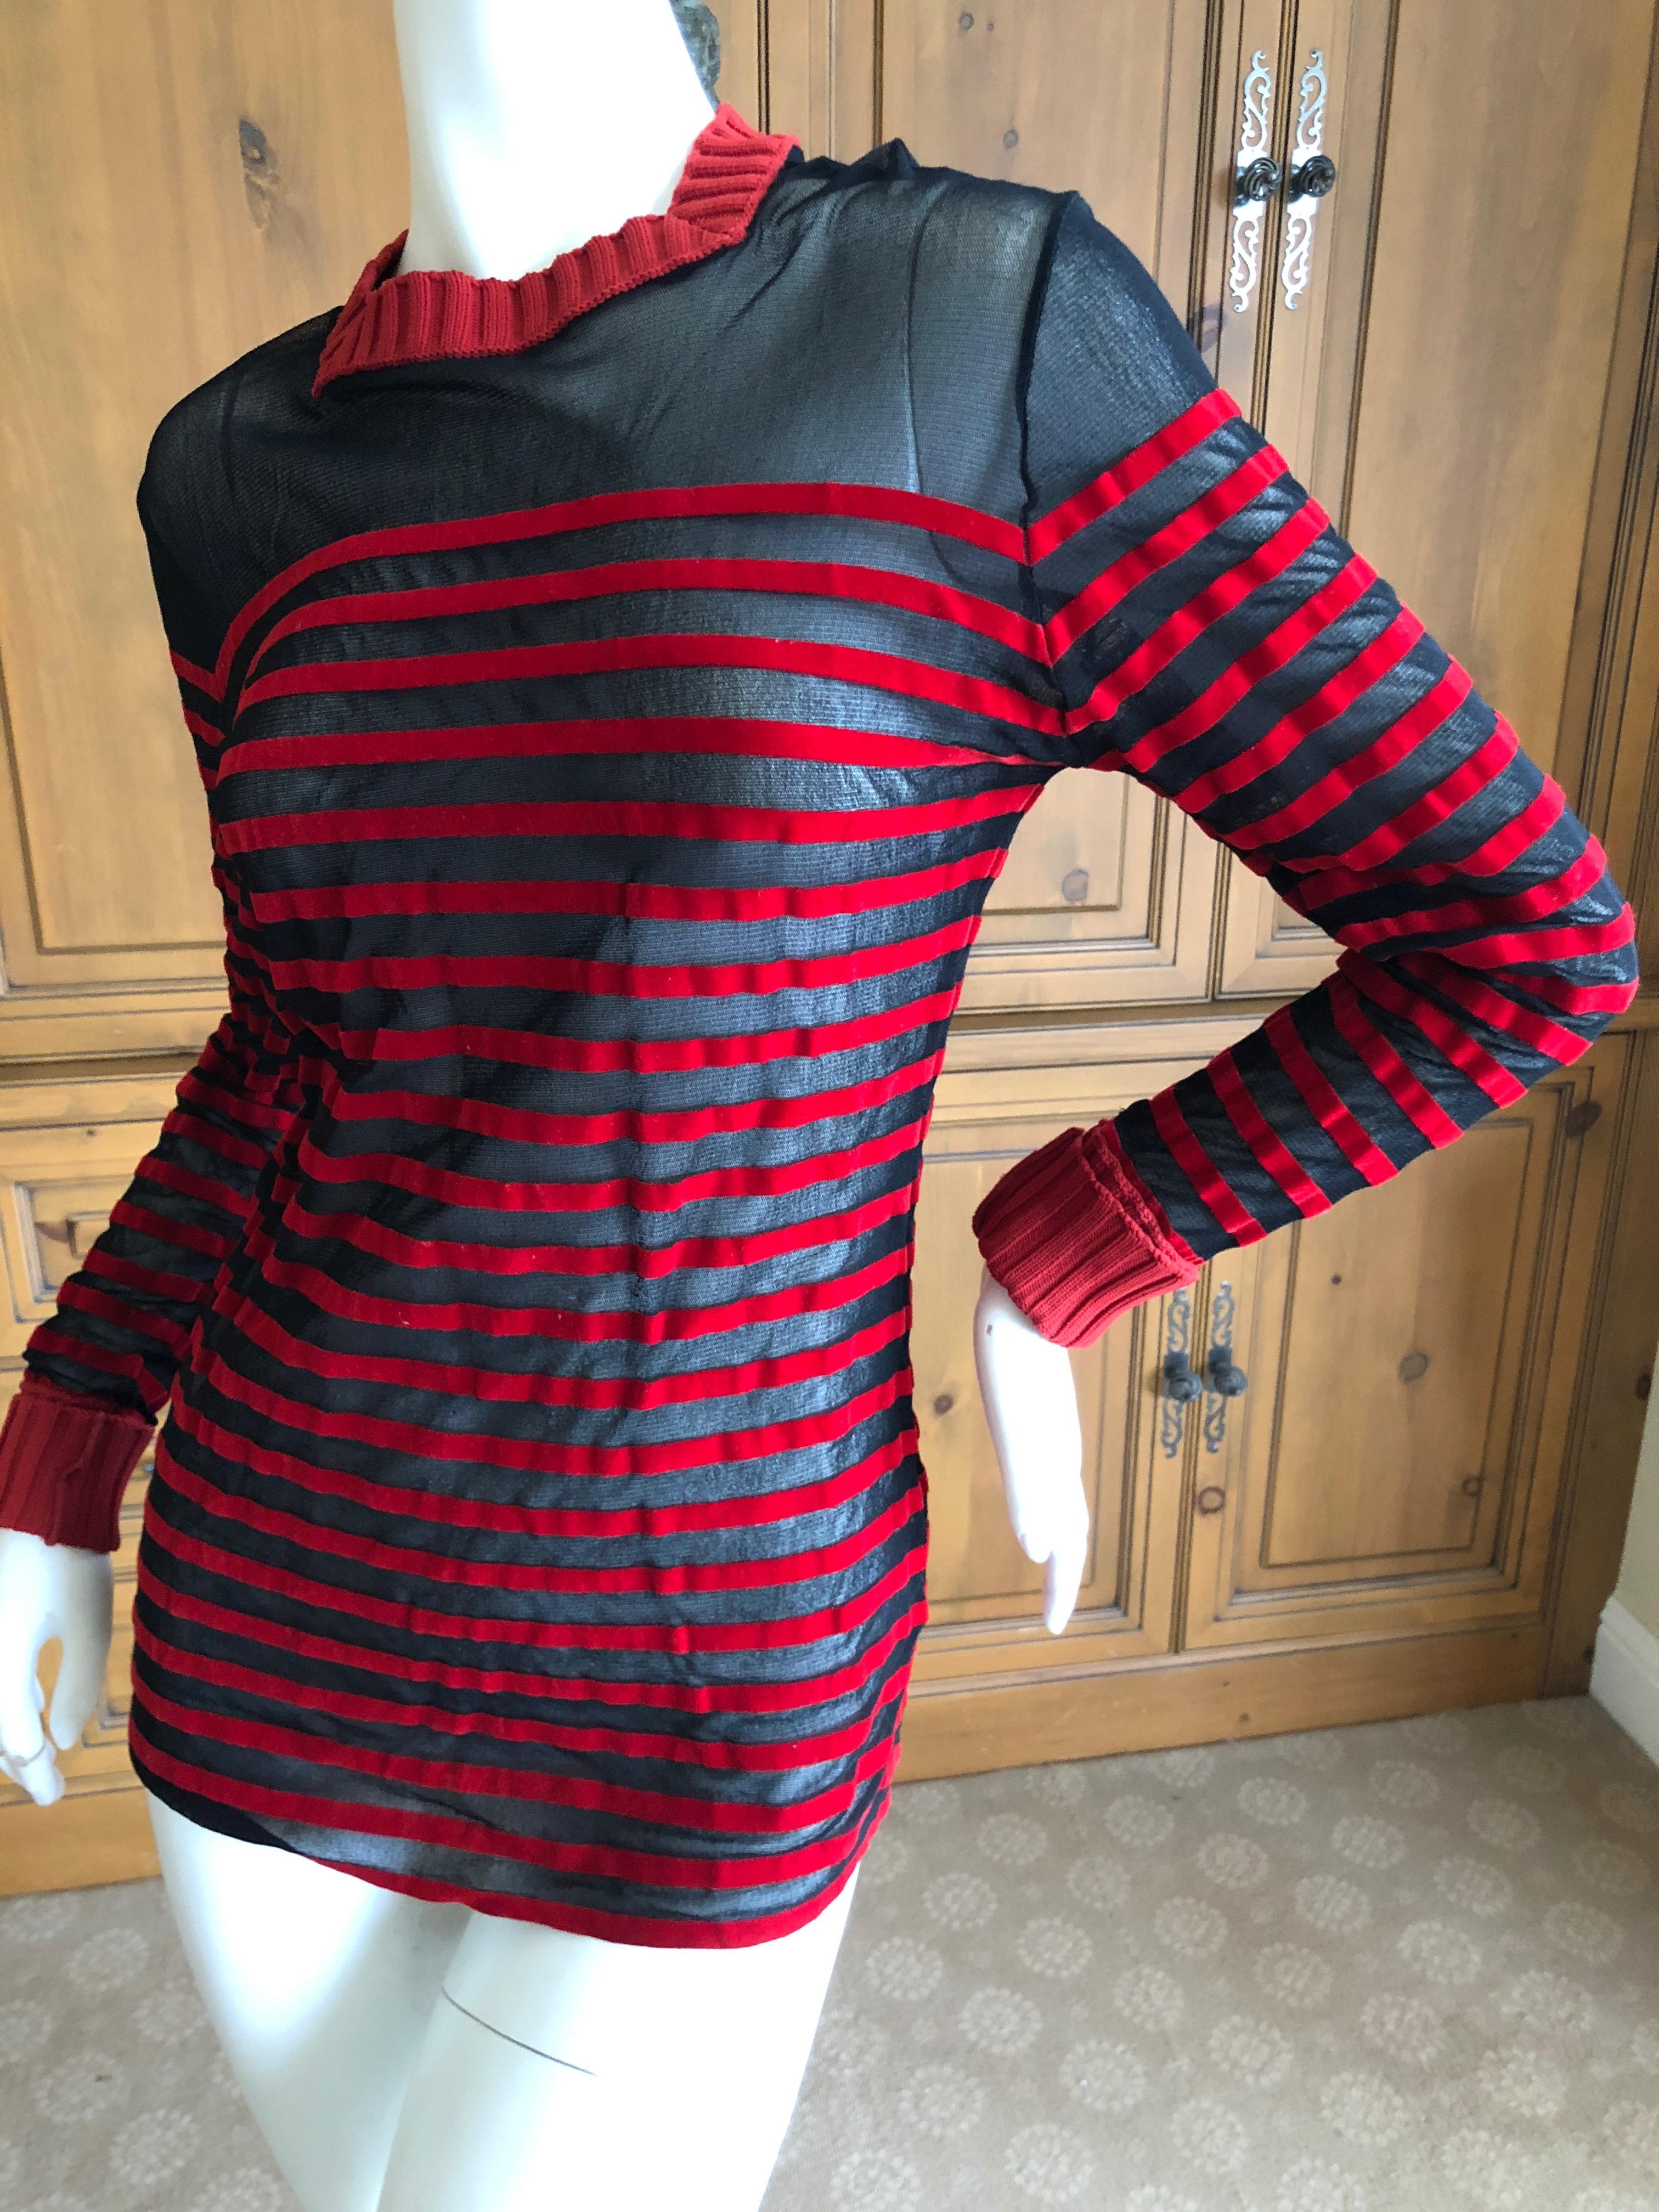 Jean Paul Gaultier Classique 1998 Sheer Velvet Stripe Sailor Shirt w Knit Detail In Excellent Condition For Sale In Cloverdale, CA